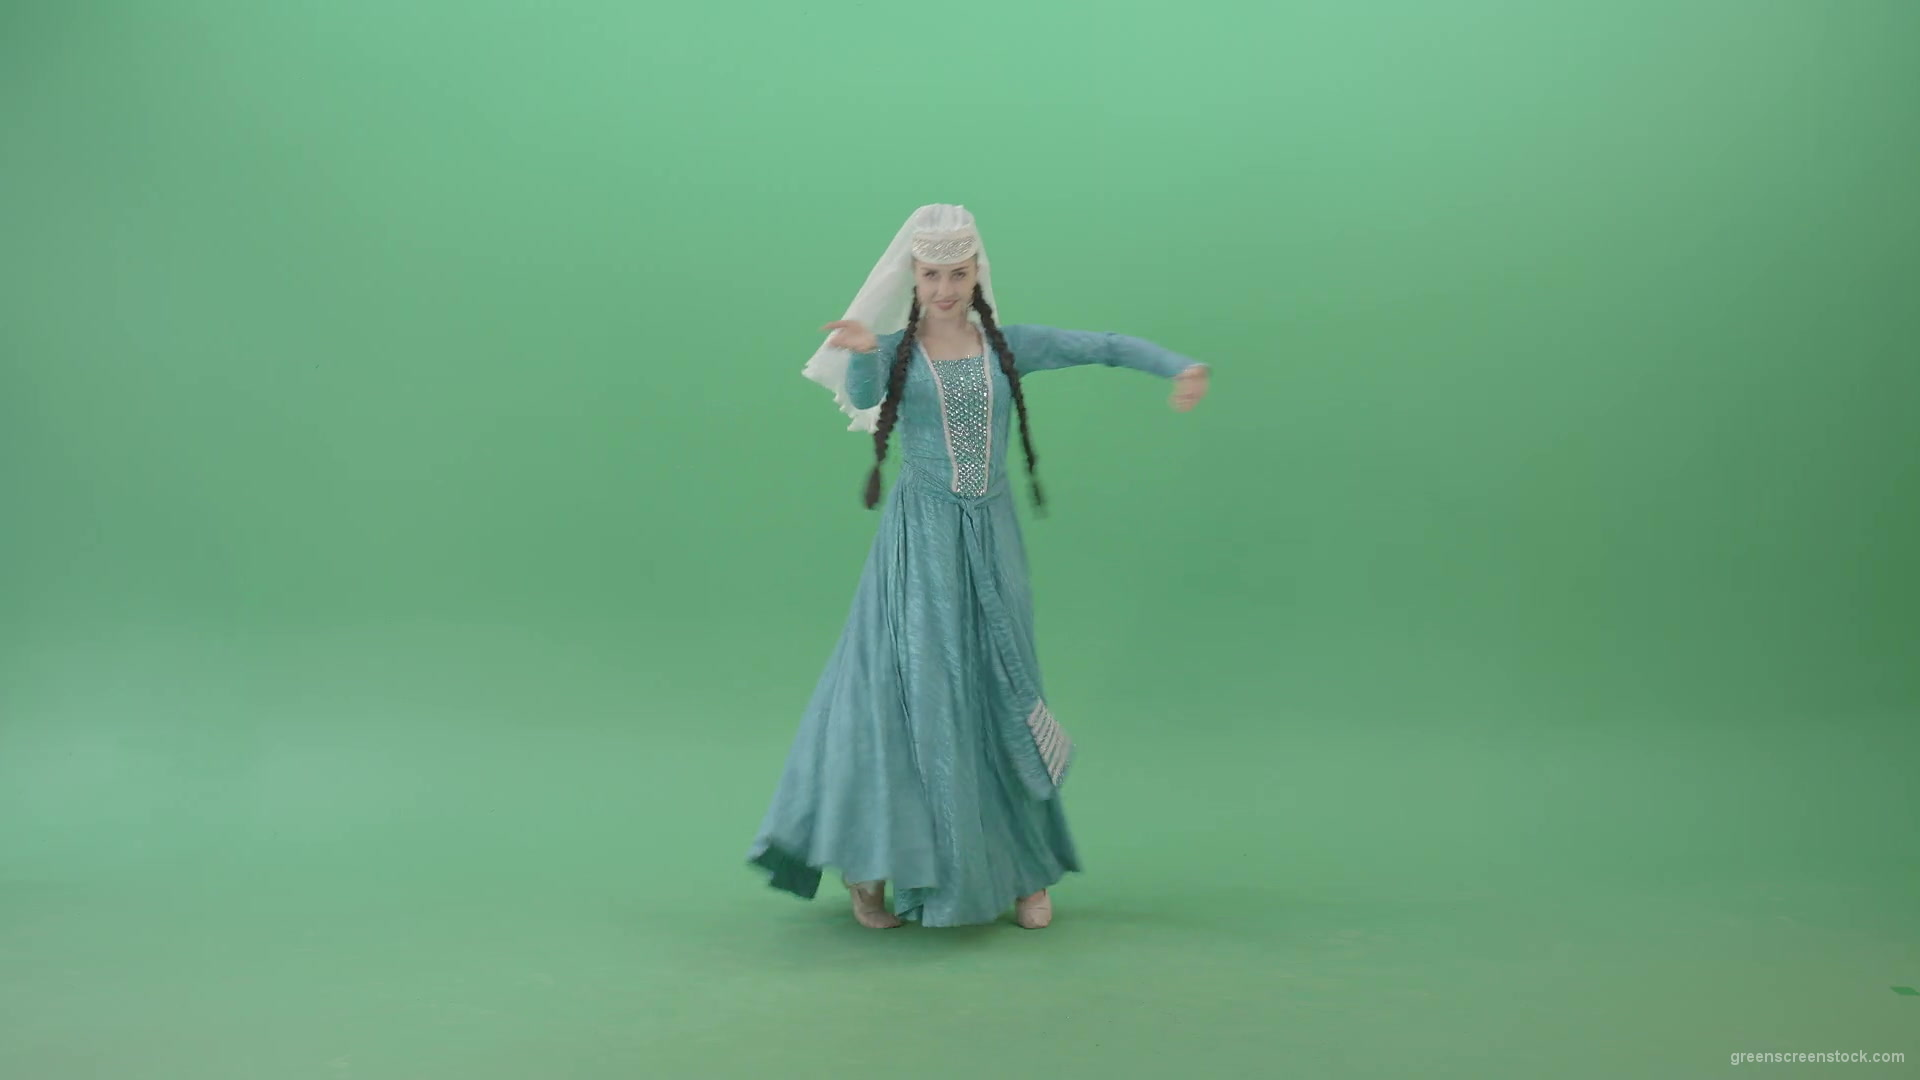 Beautiful-elegant-Woman-in-Blue-Dress-dancing-Perkhuli-oriental-dance-on-Green-Screen-4K-Video-Clip-1920_007 Green Screen Stock